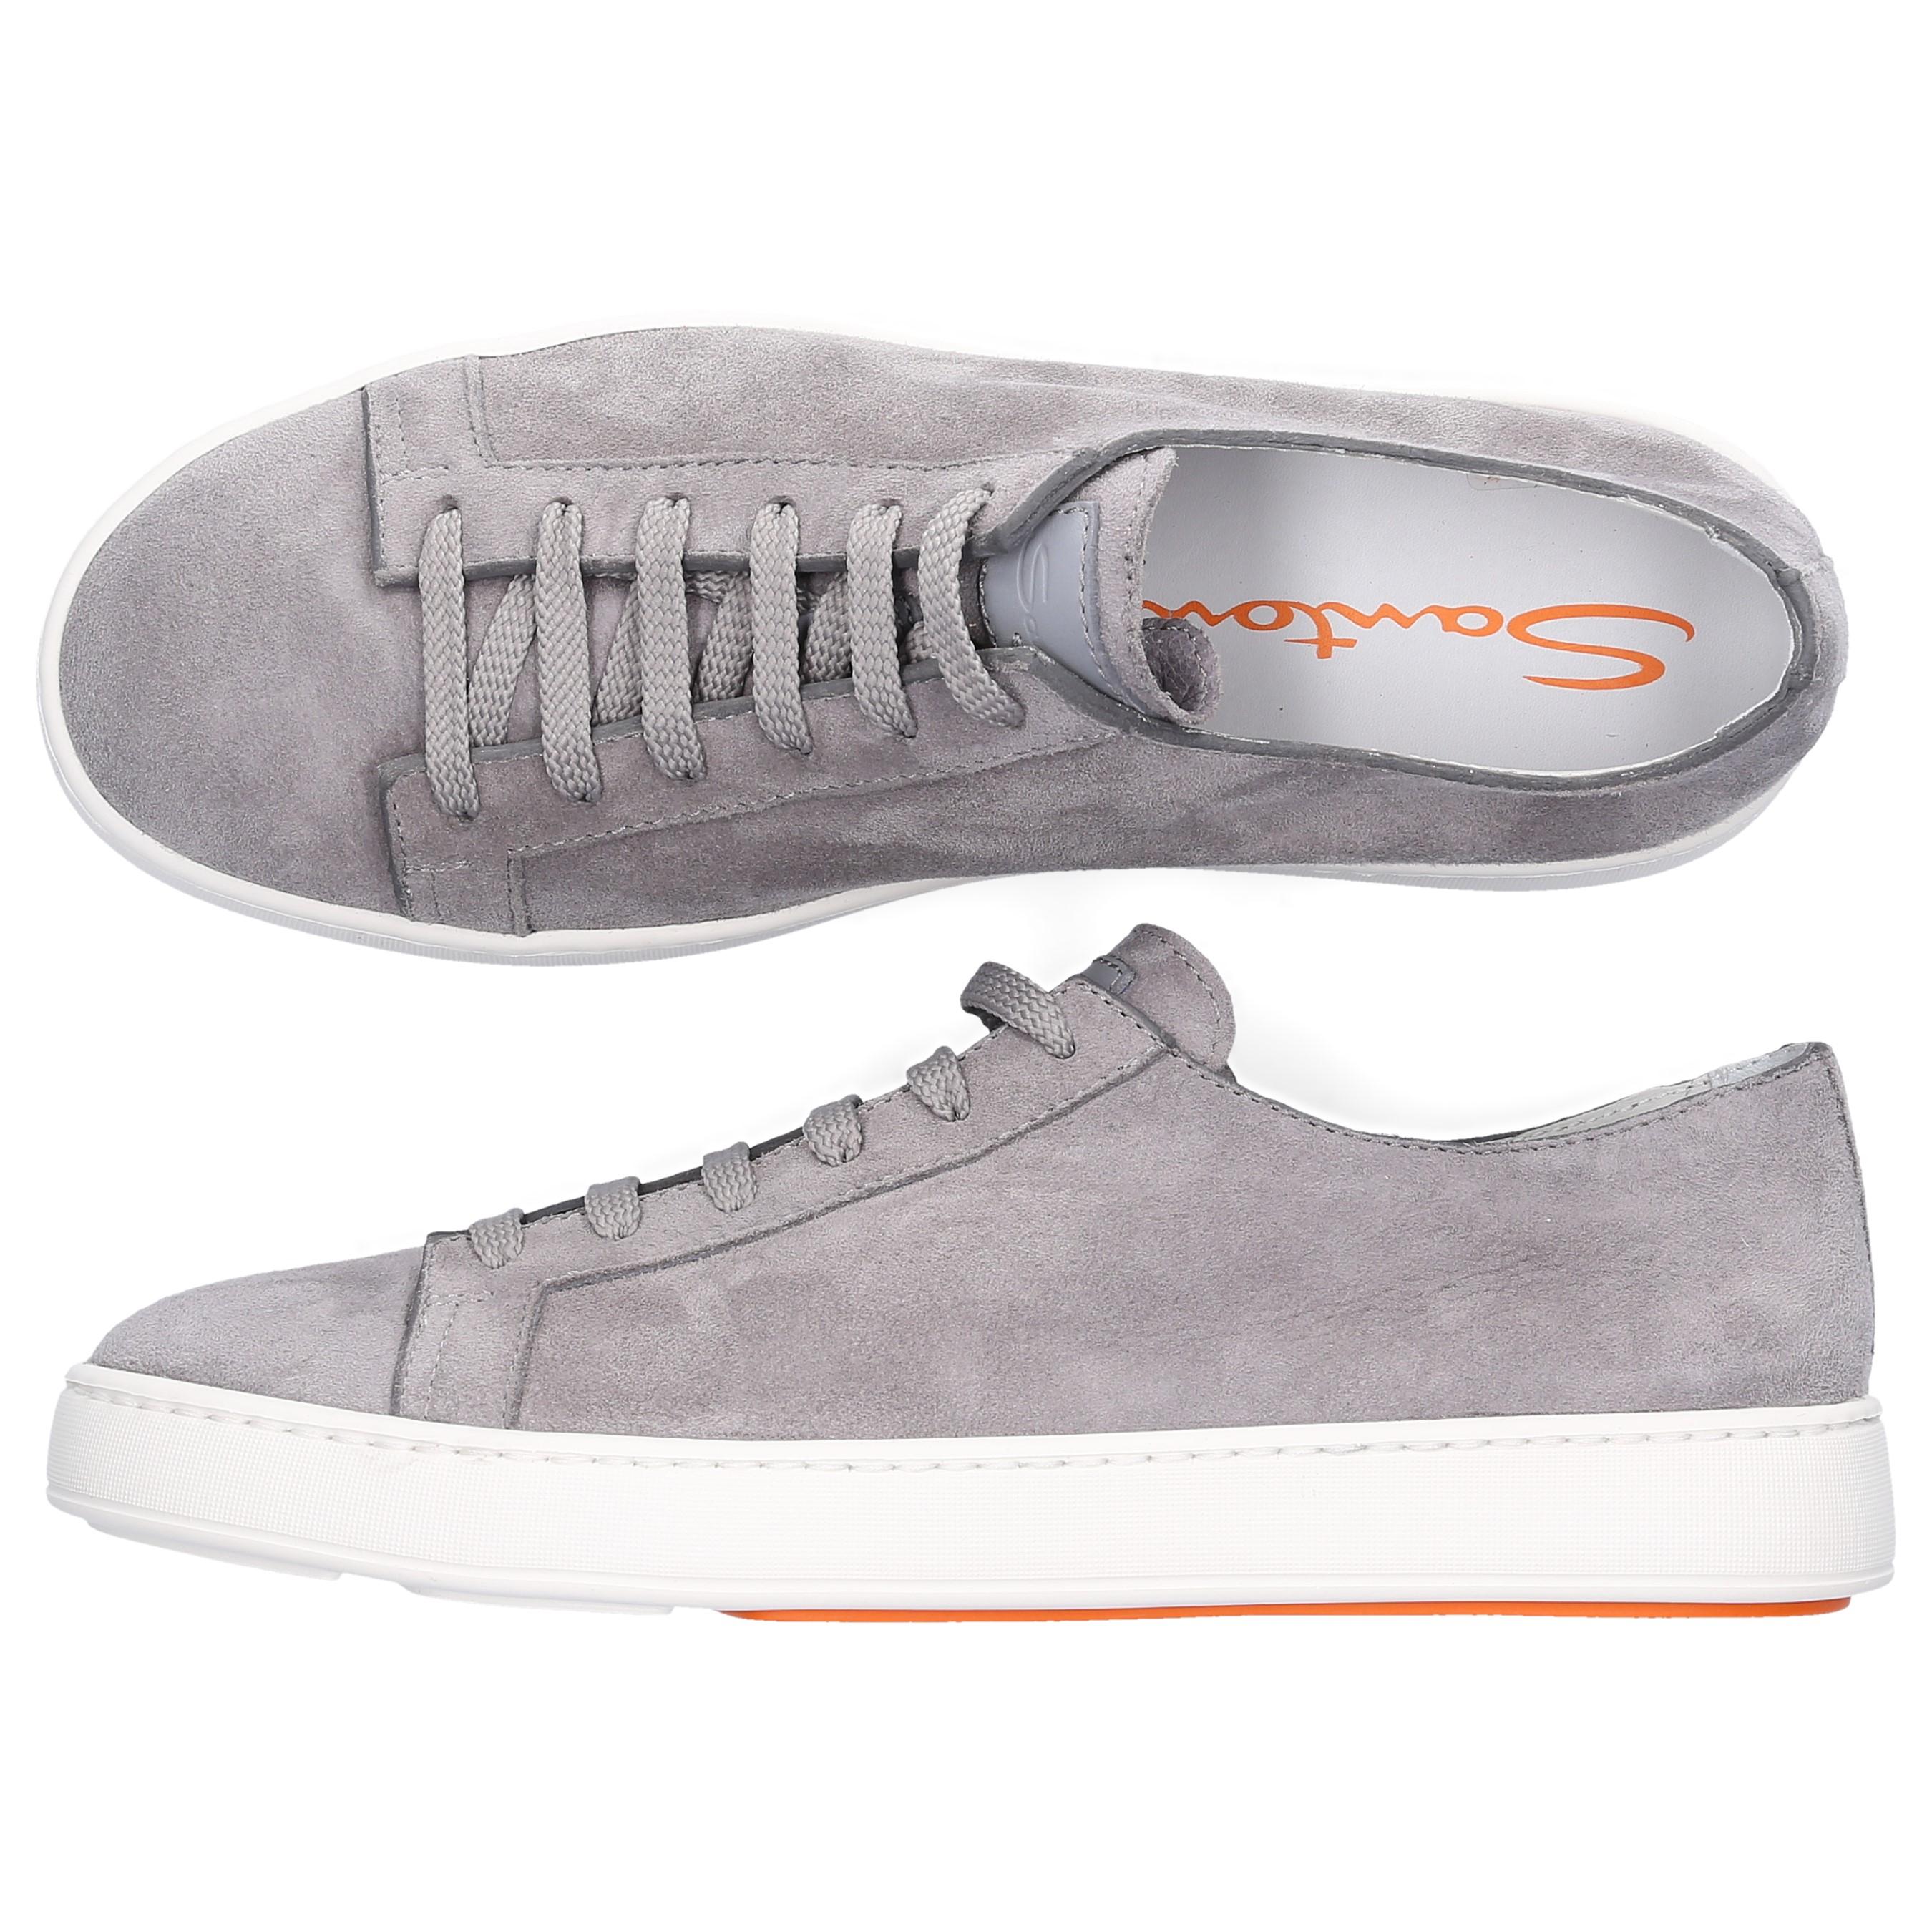 Santoni Suede Sneakers Grey 14387 in Gray for Men - Lyst